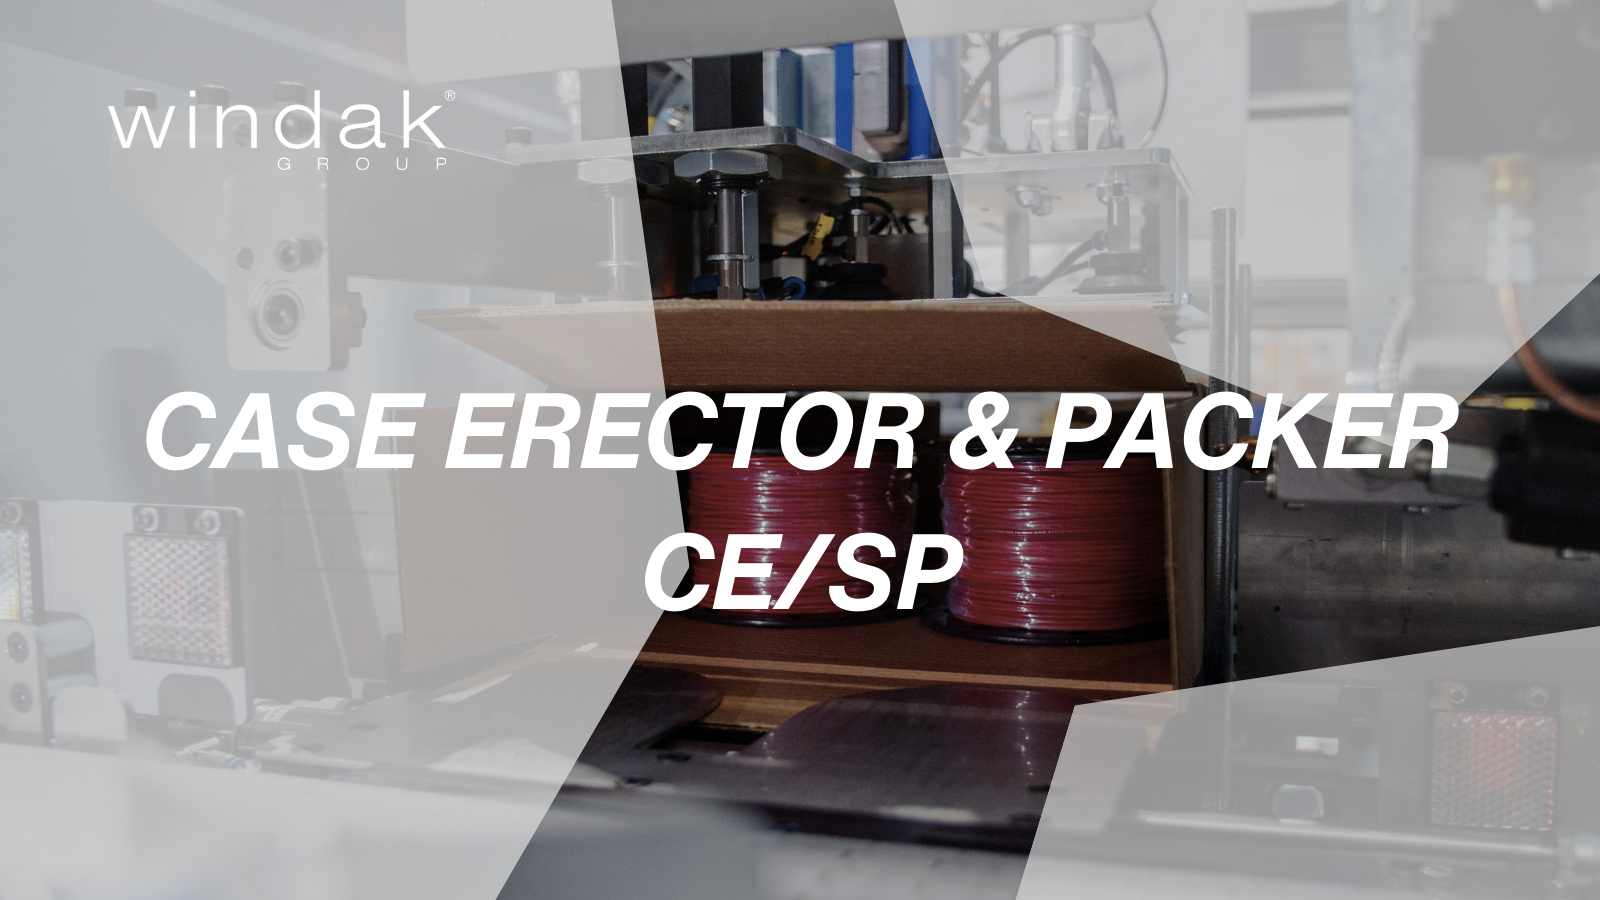 Windak’s CE/SP Case Erector and Packer